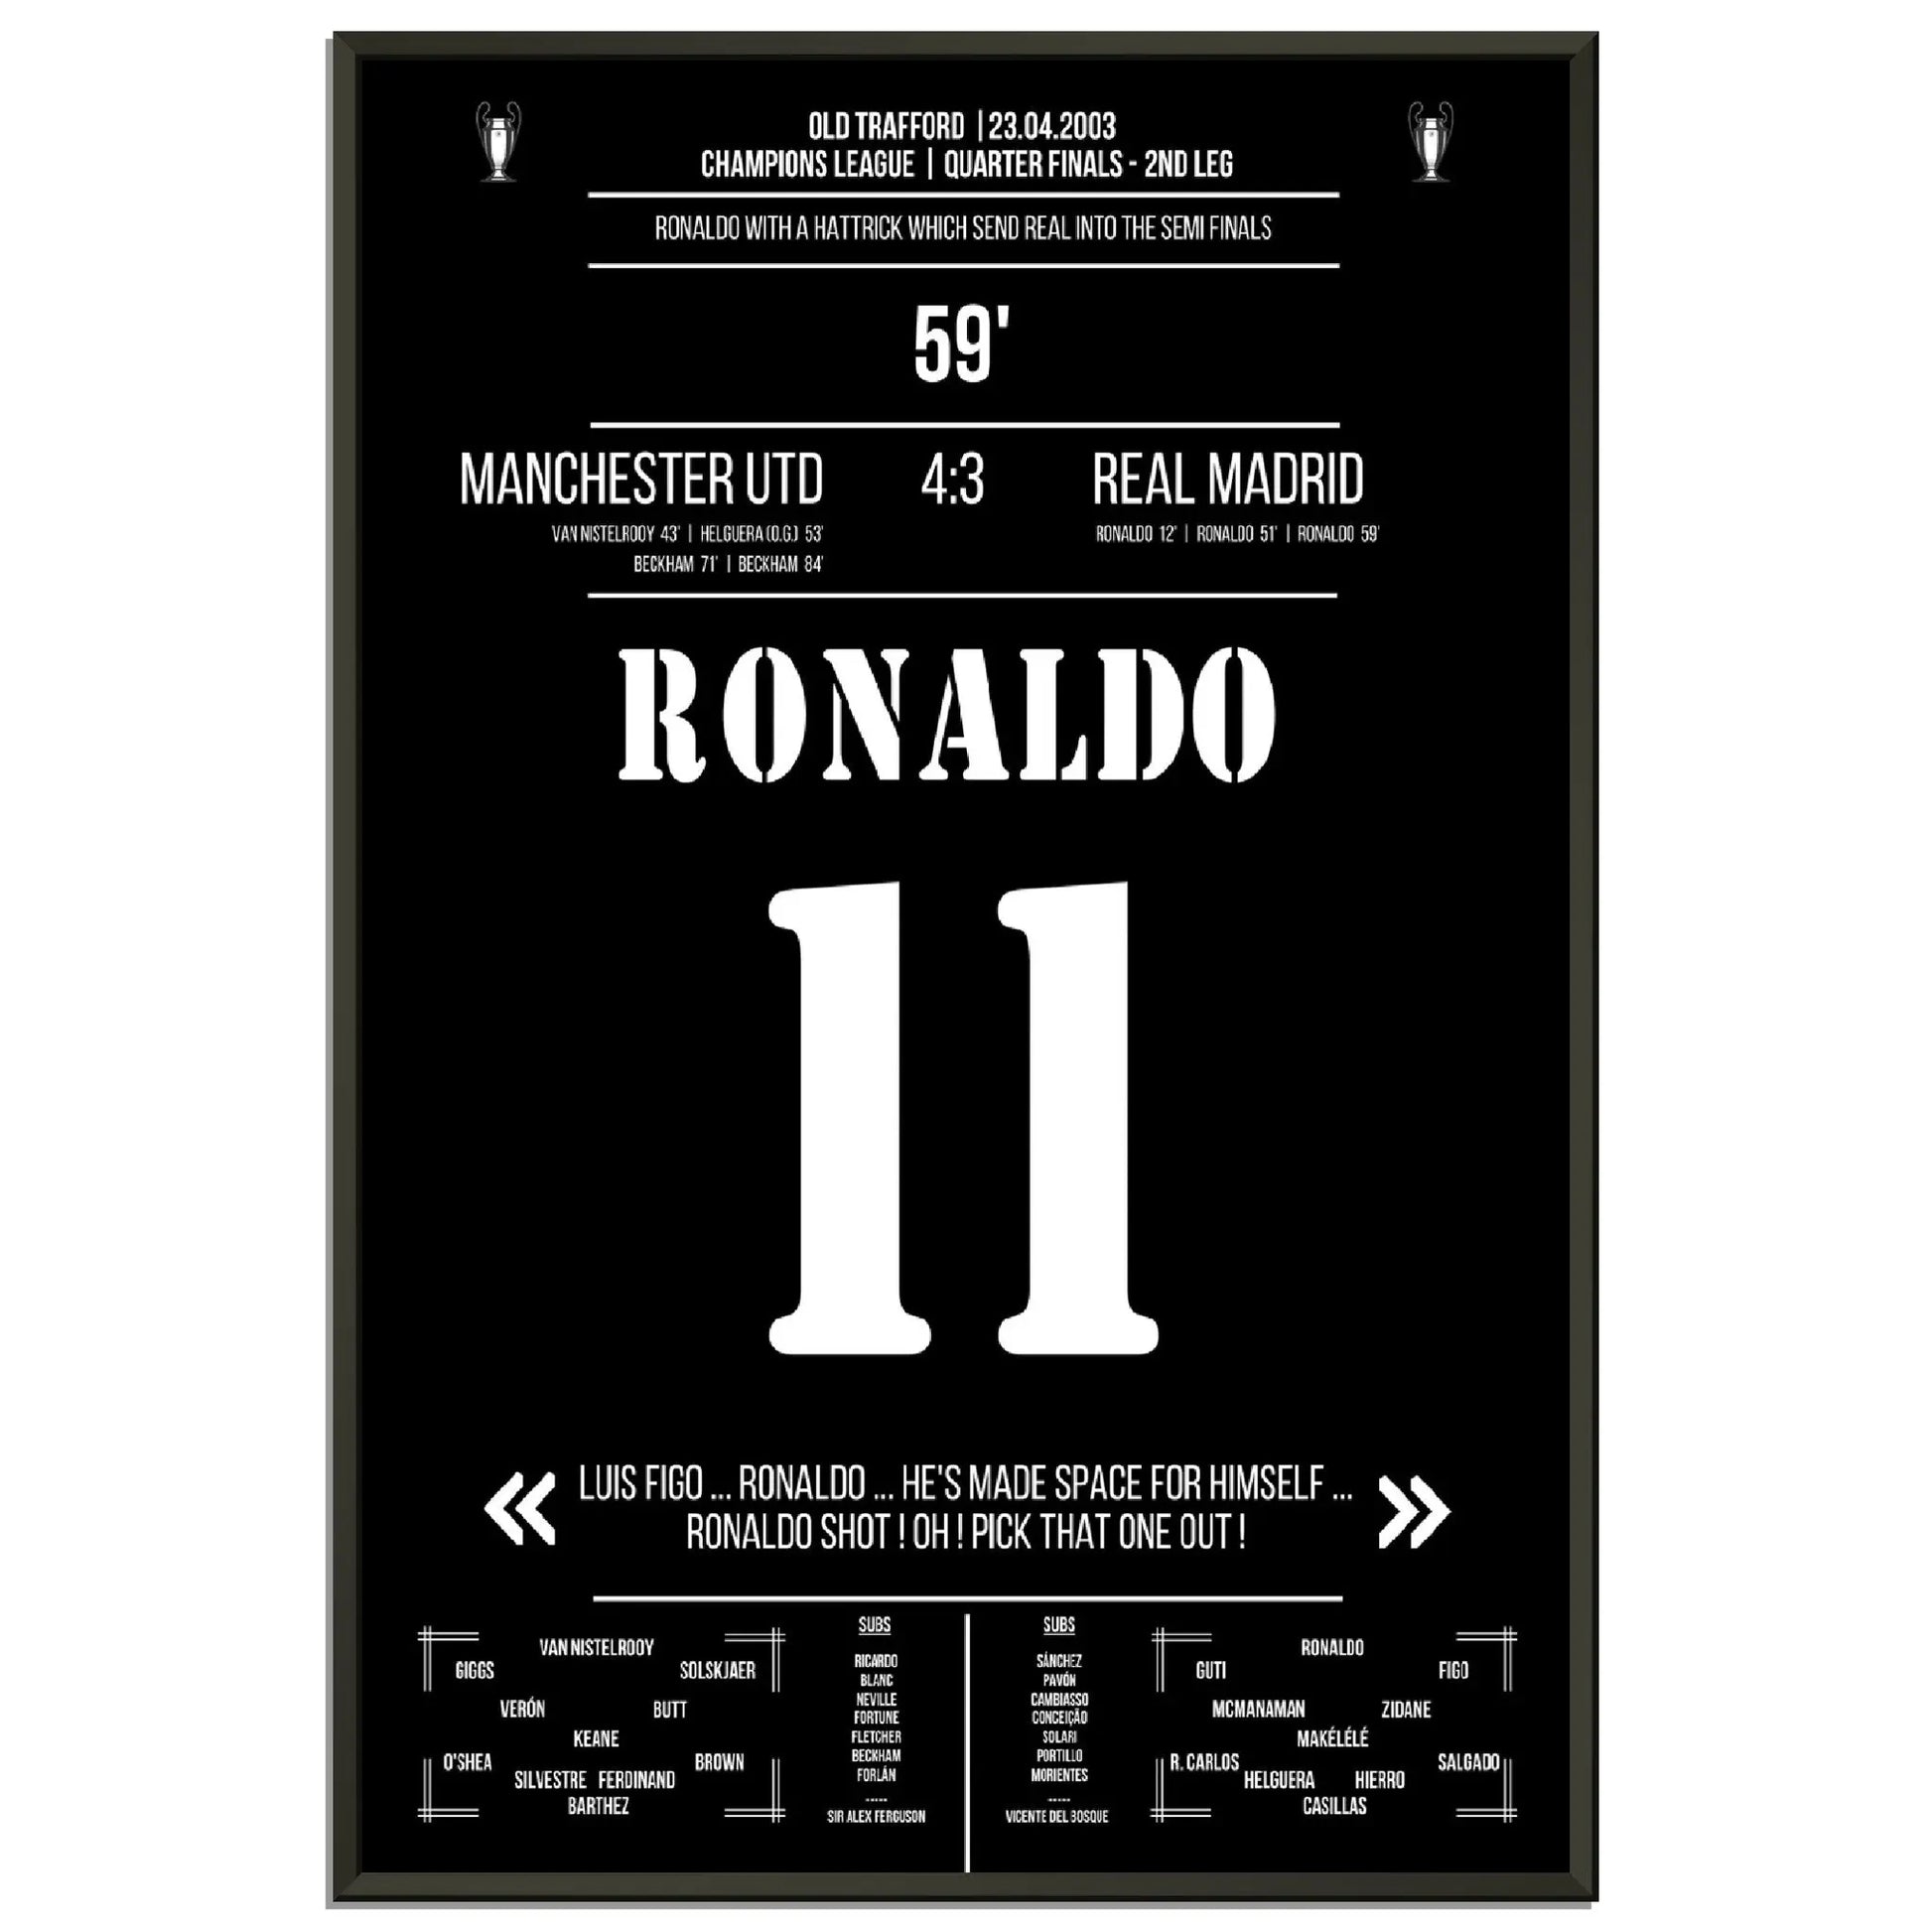 Ronaldo's Hattrick im Old Trafford in 2003 